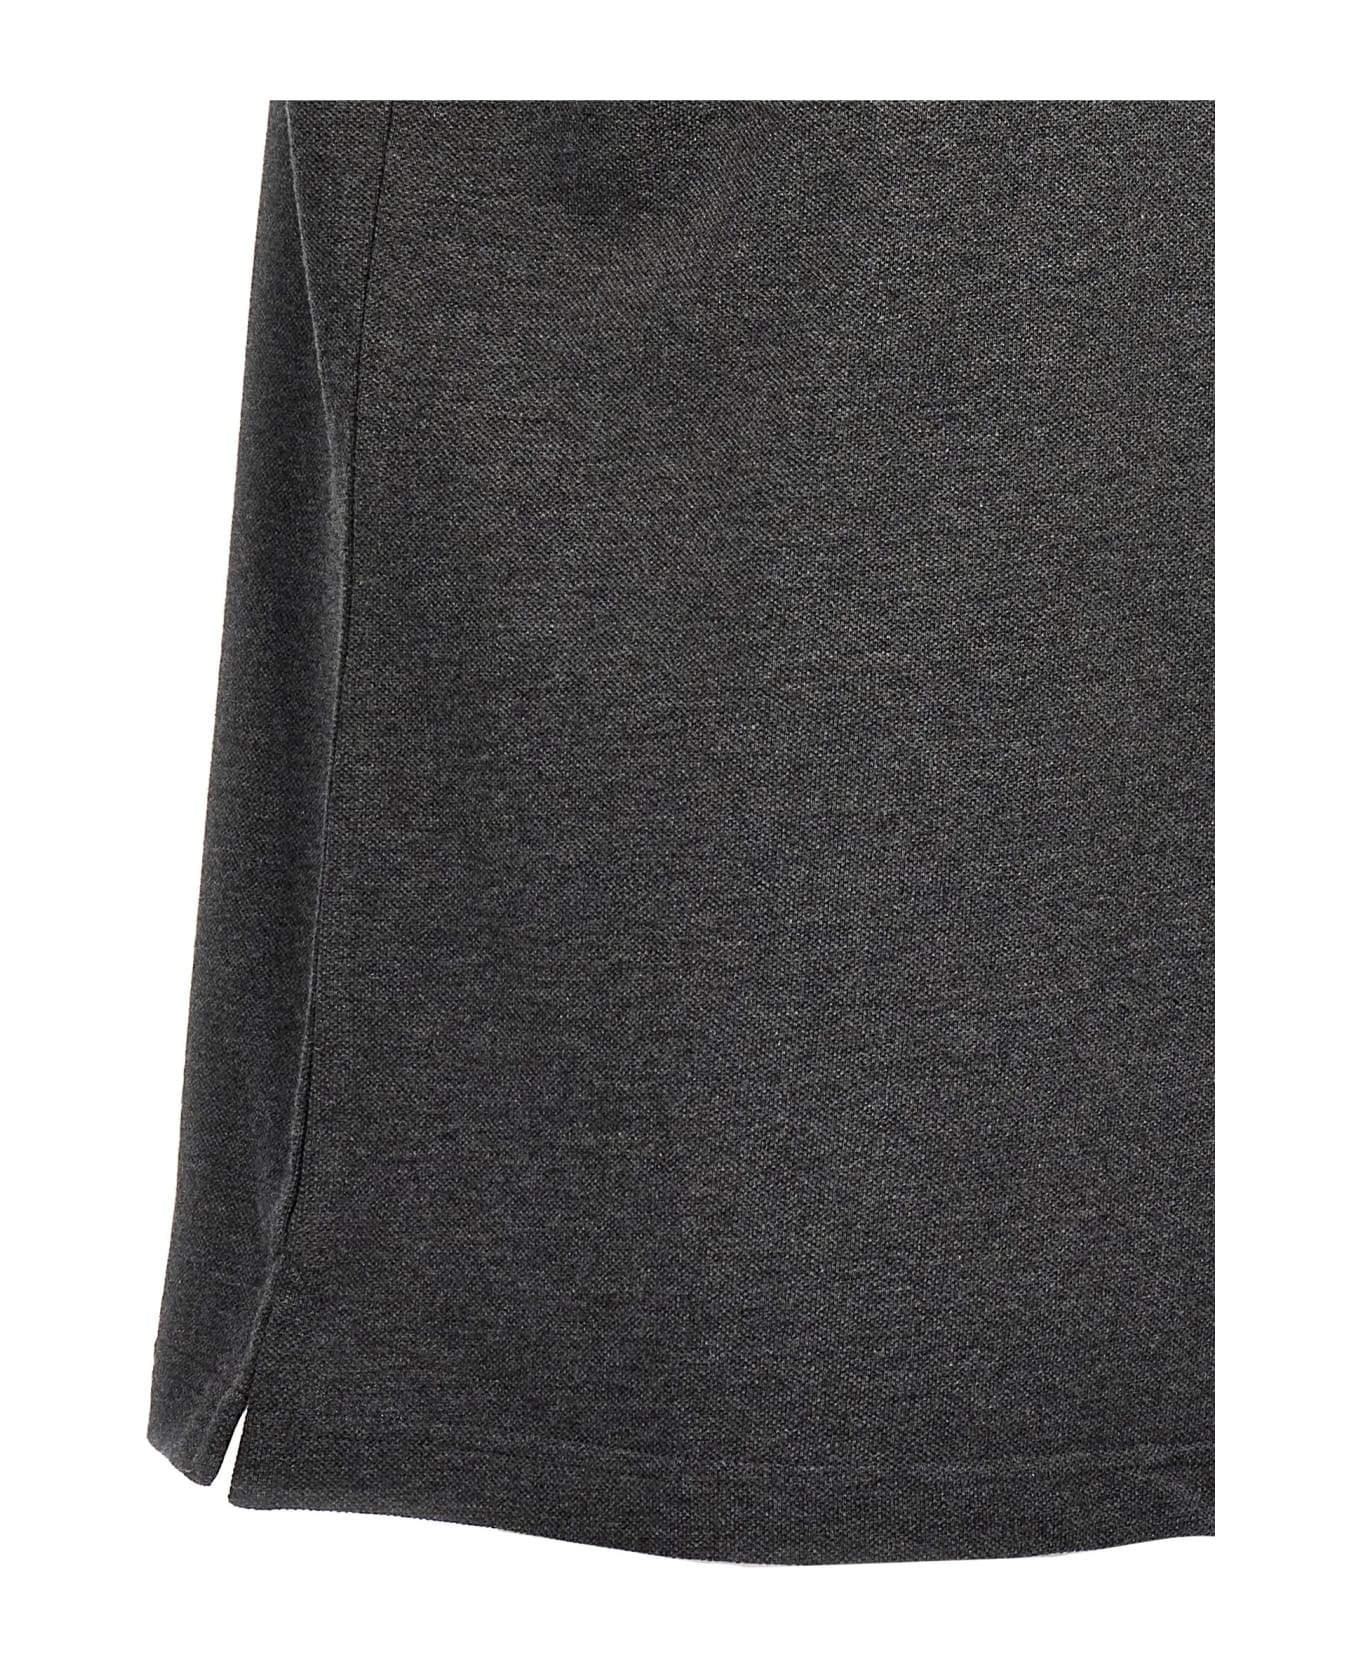 Barbour Logo Embroidery Polo Shirt - Gray